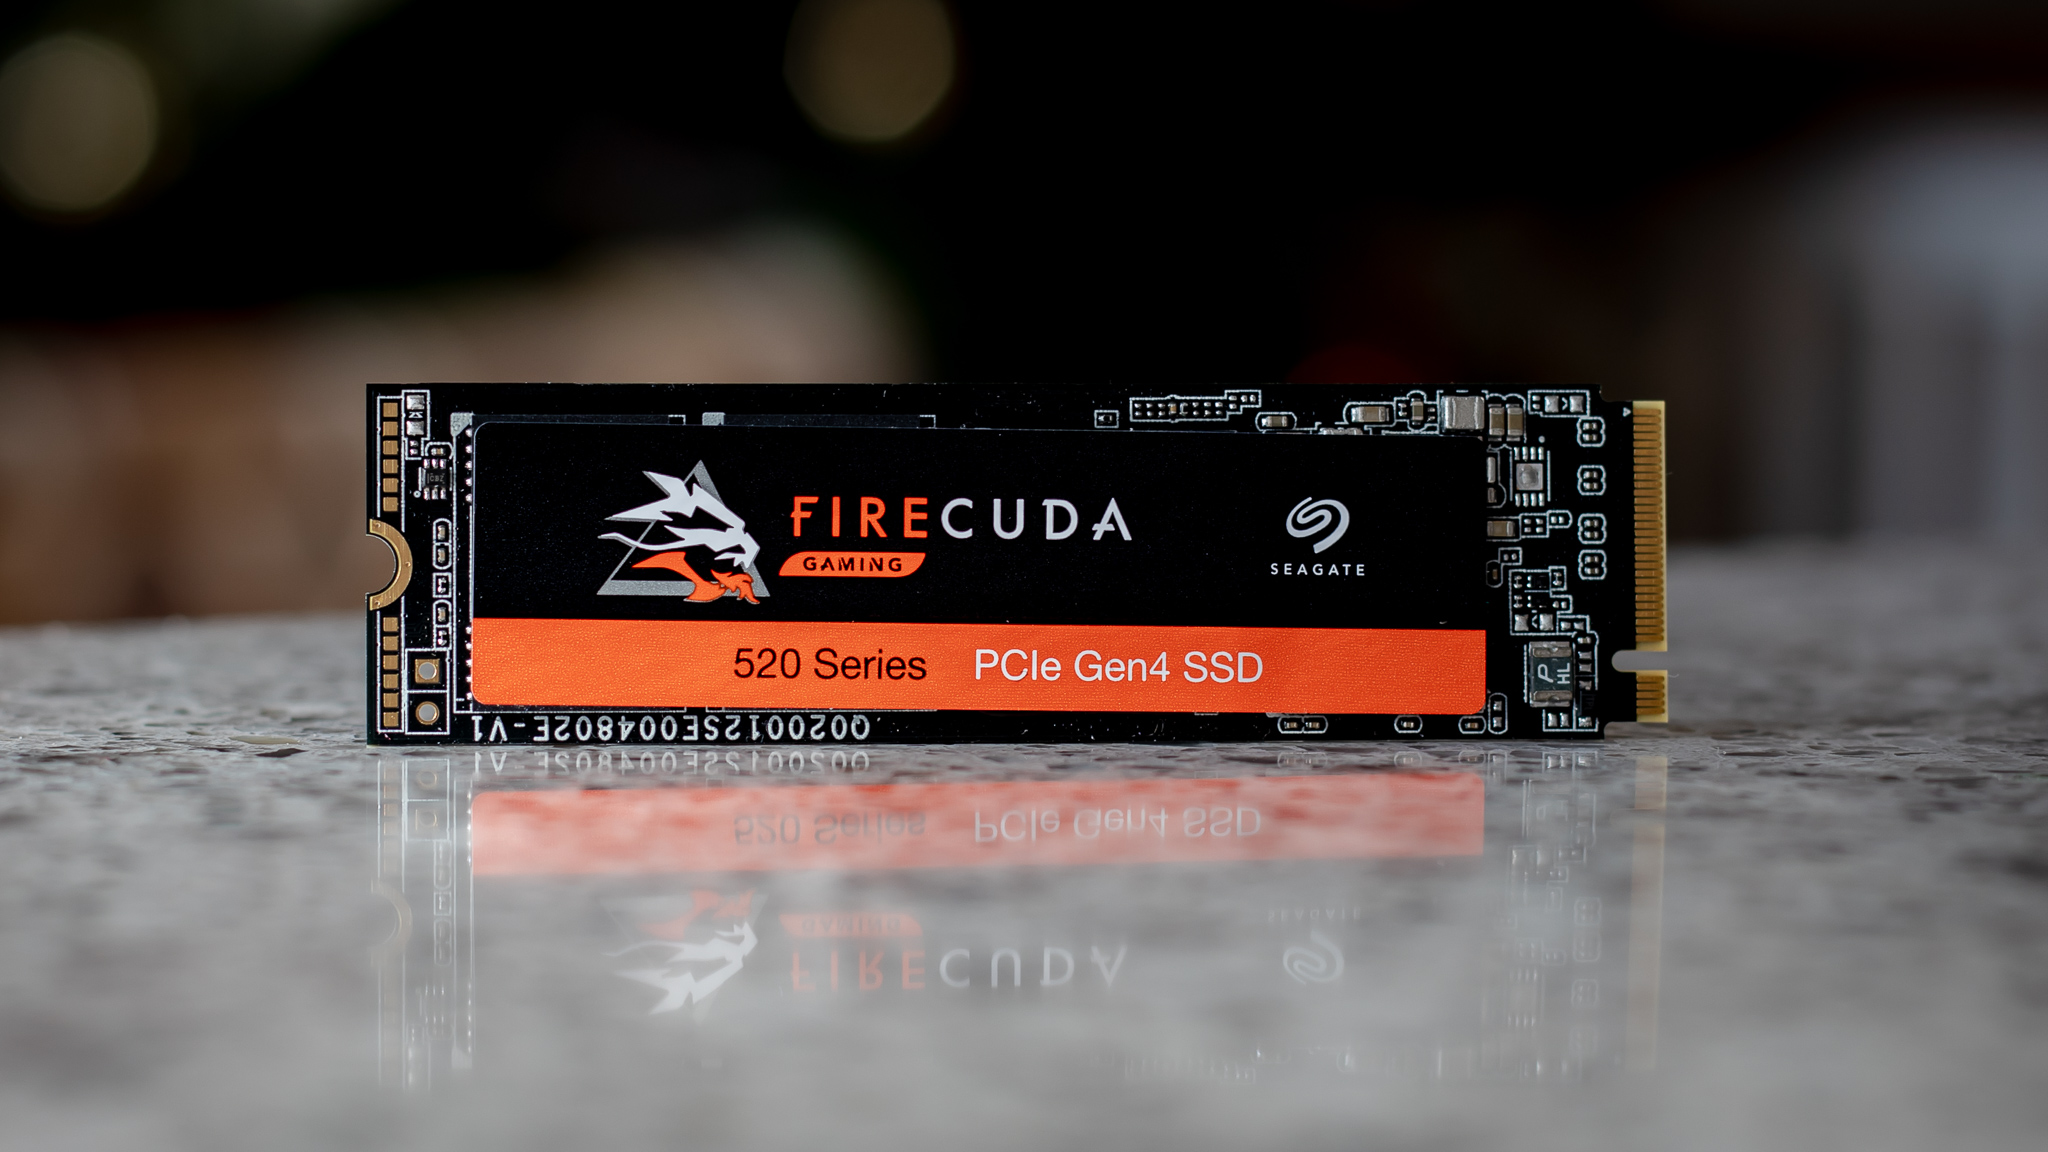 Seagate Firecuda 520 SSD